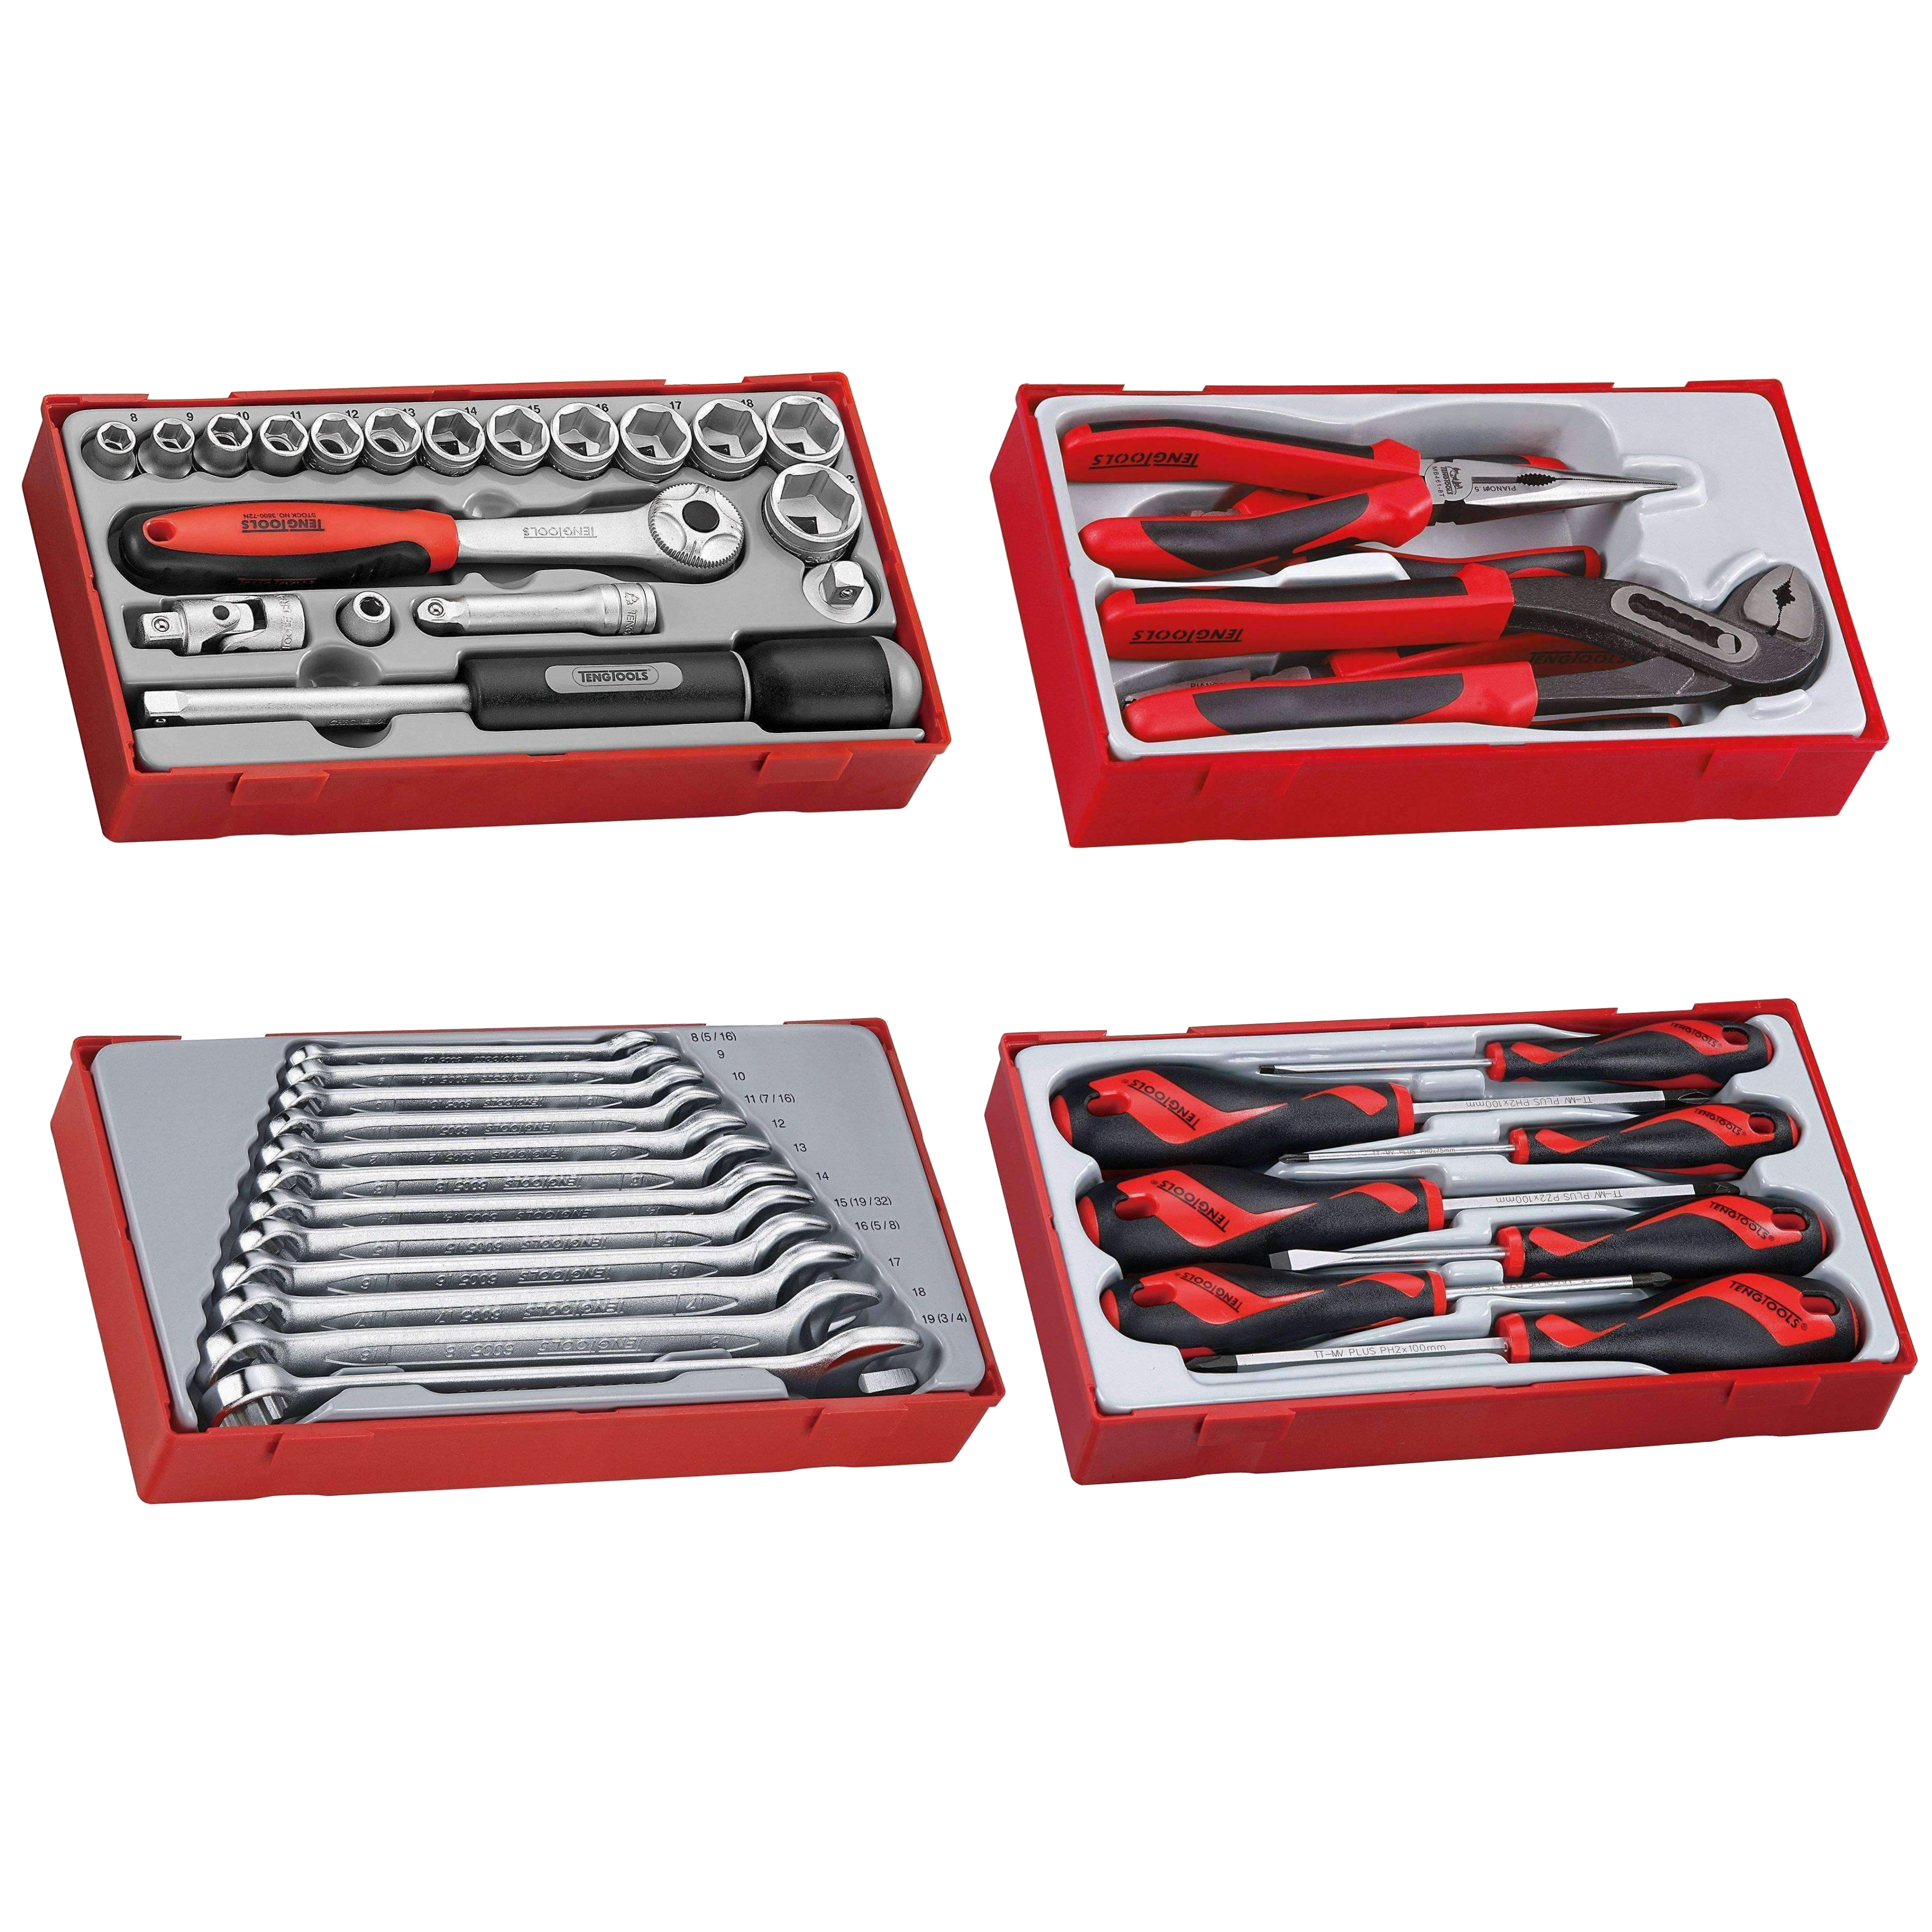 Teng Tools 231 Piece Complete Mixed General Hand Tool Kit (Mega Bundle 1) - TCW707EV-KIT2